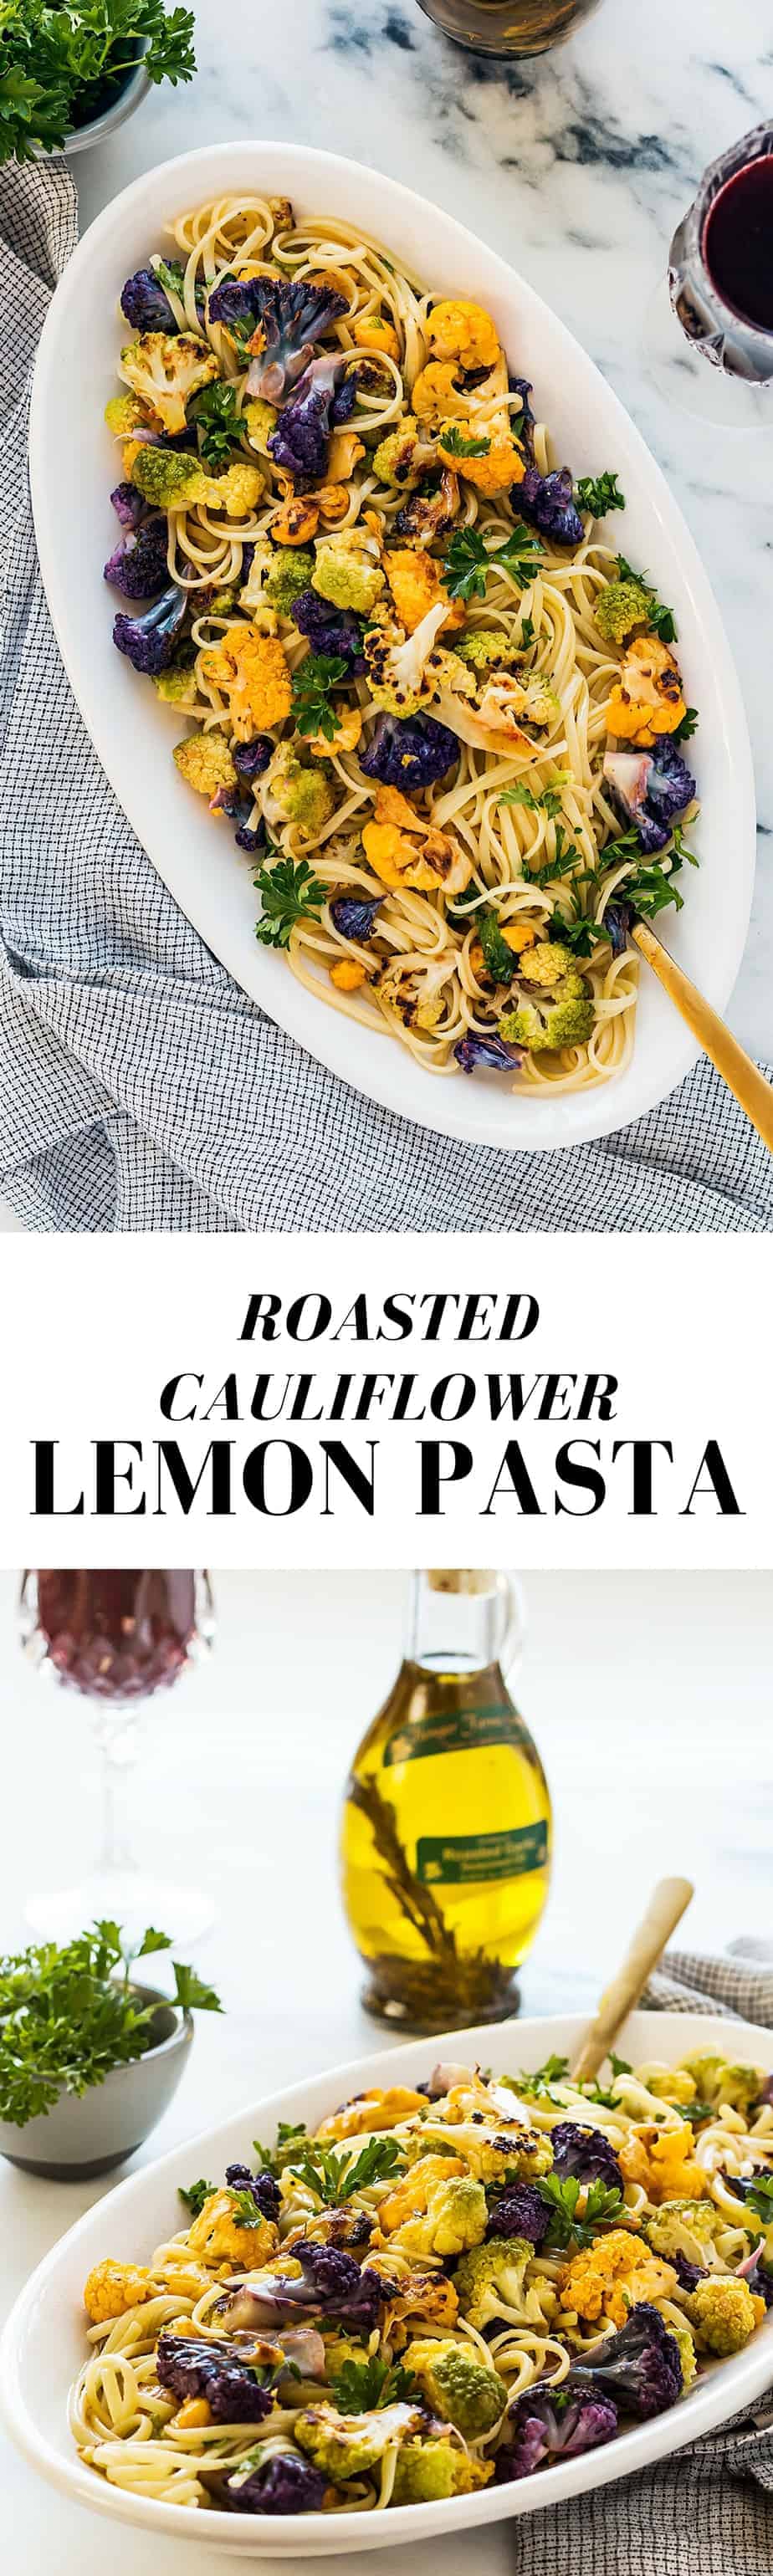 lemon pasta roasted cauliflower